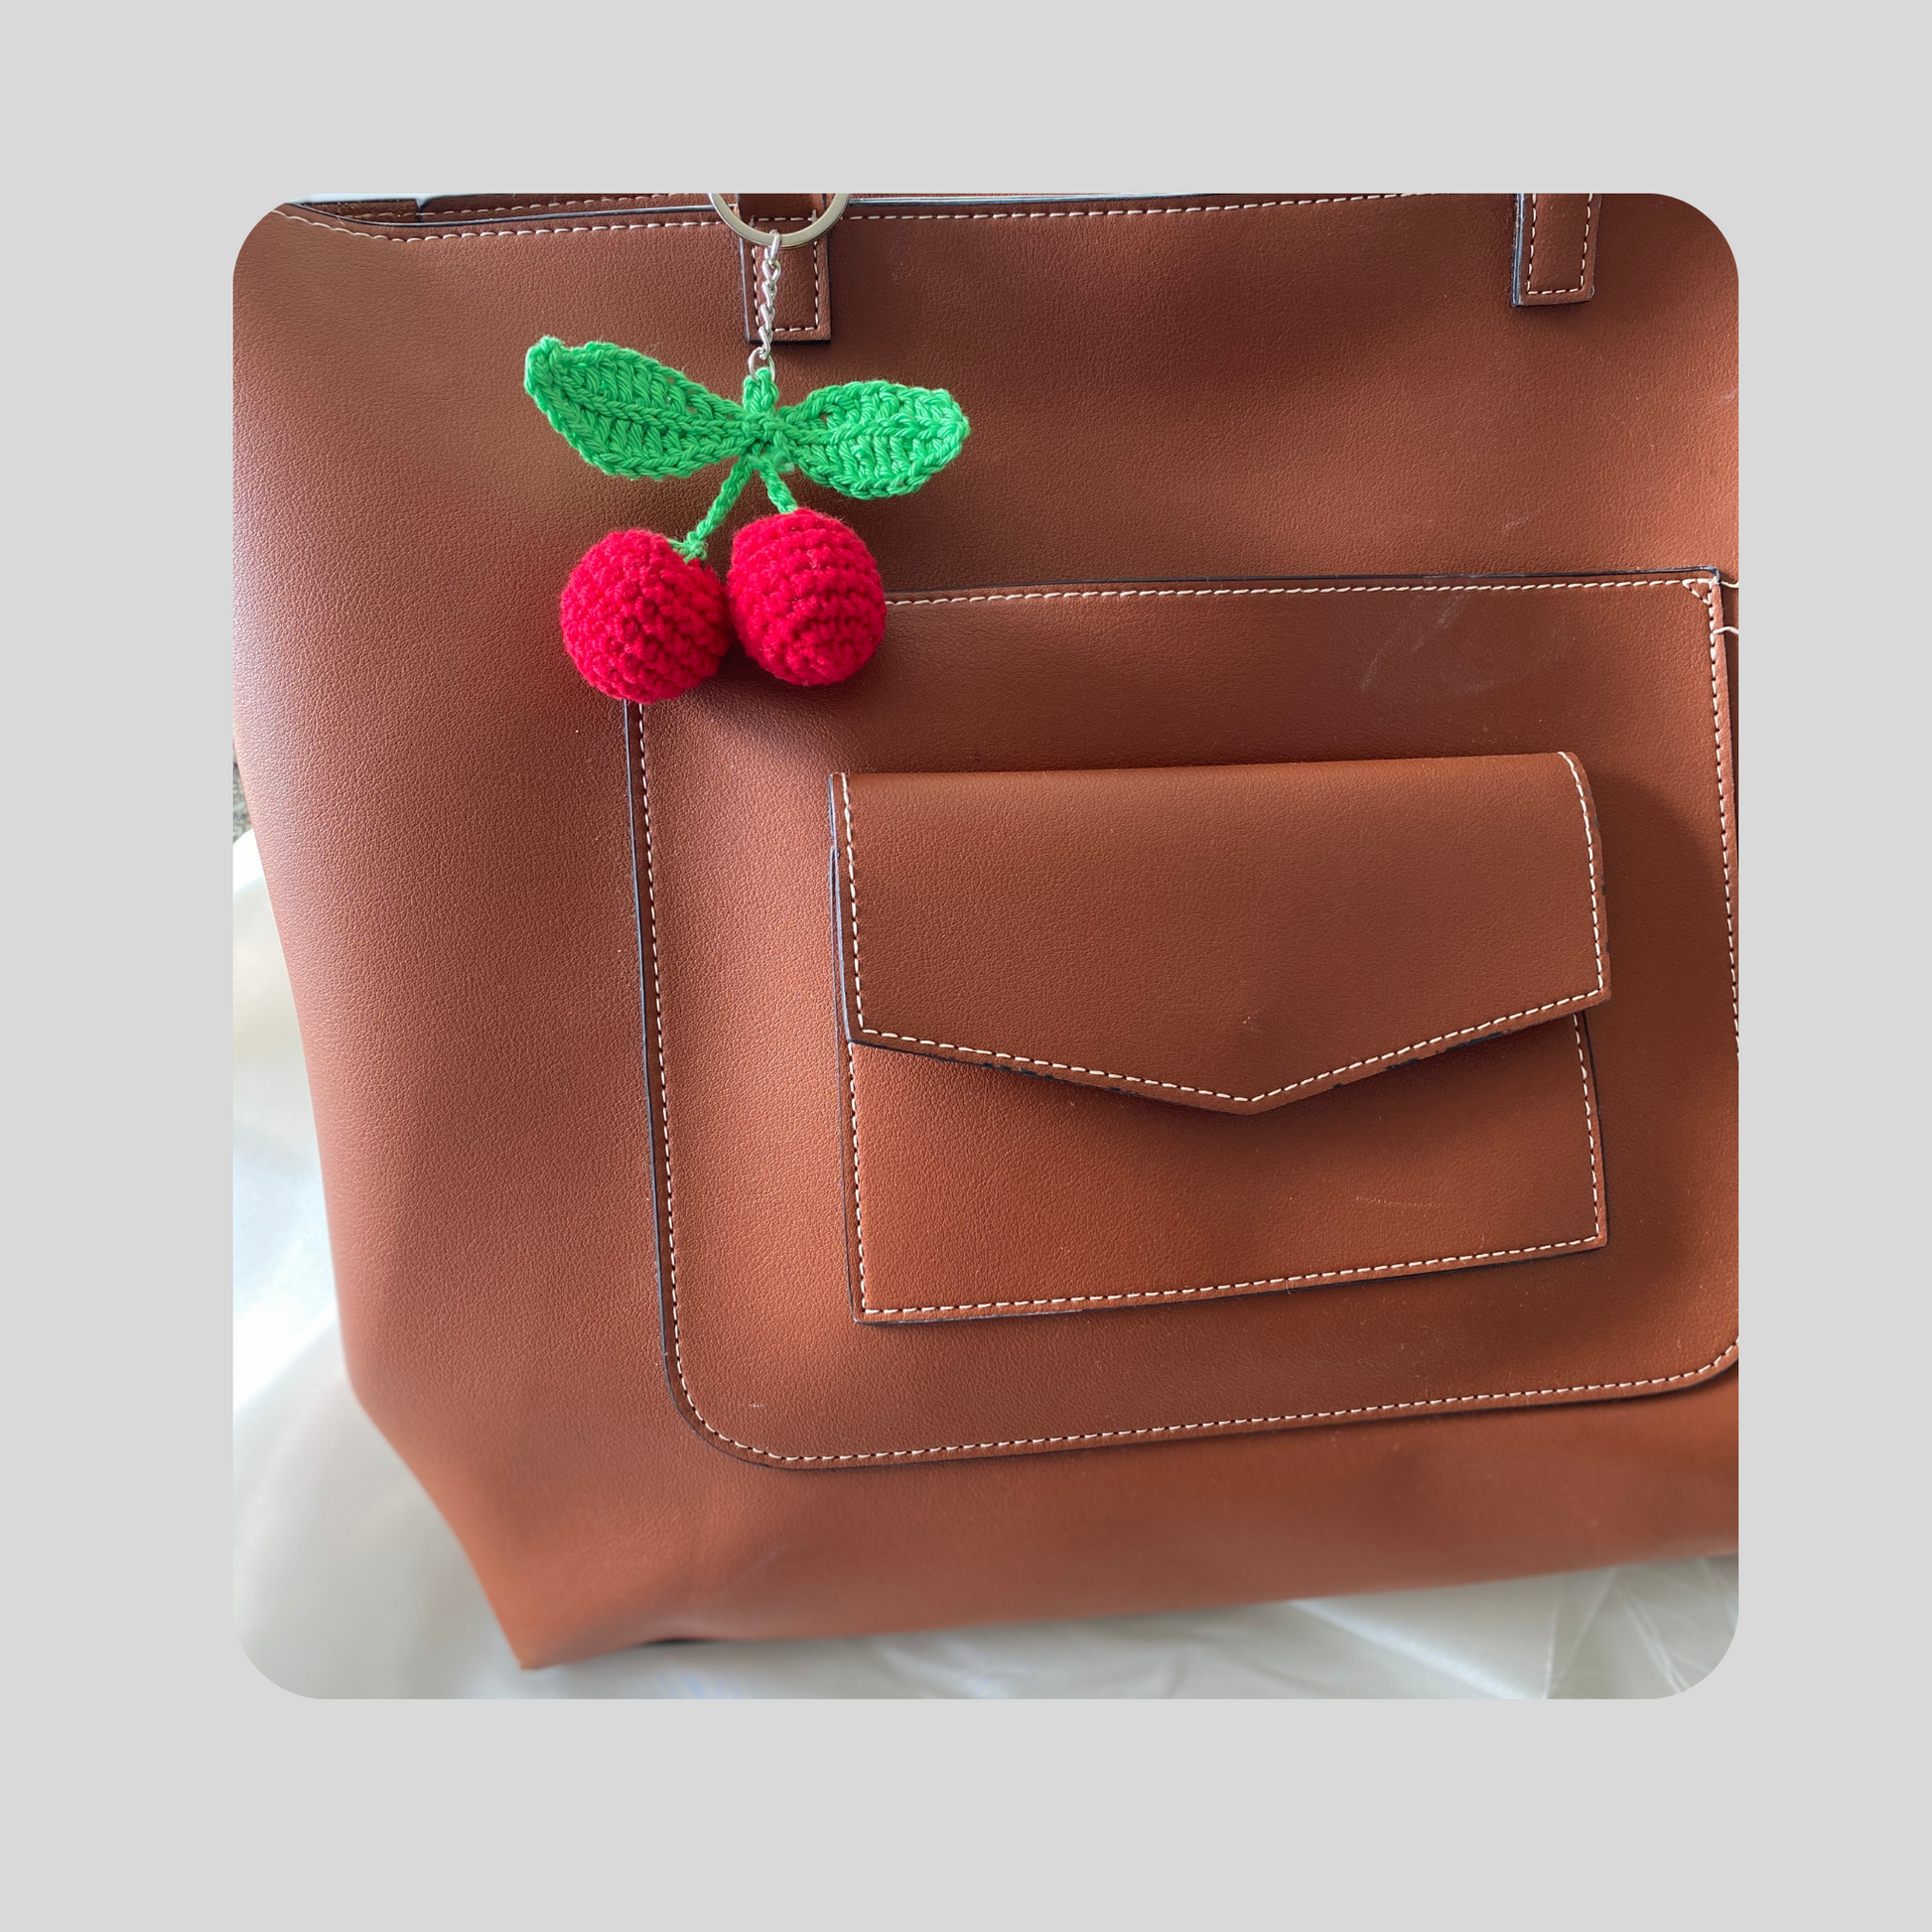 Red Cherry Bag Charm